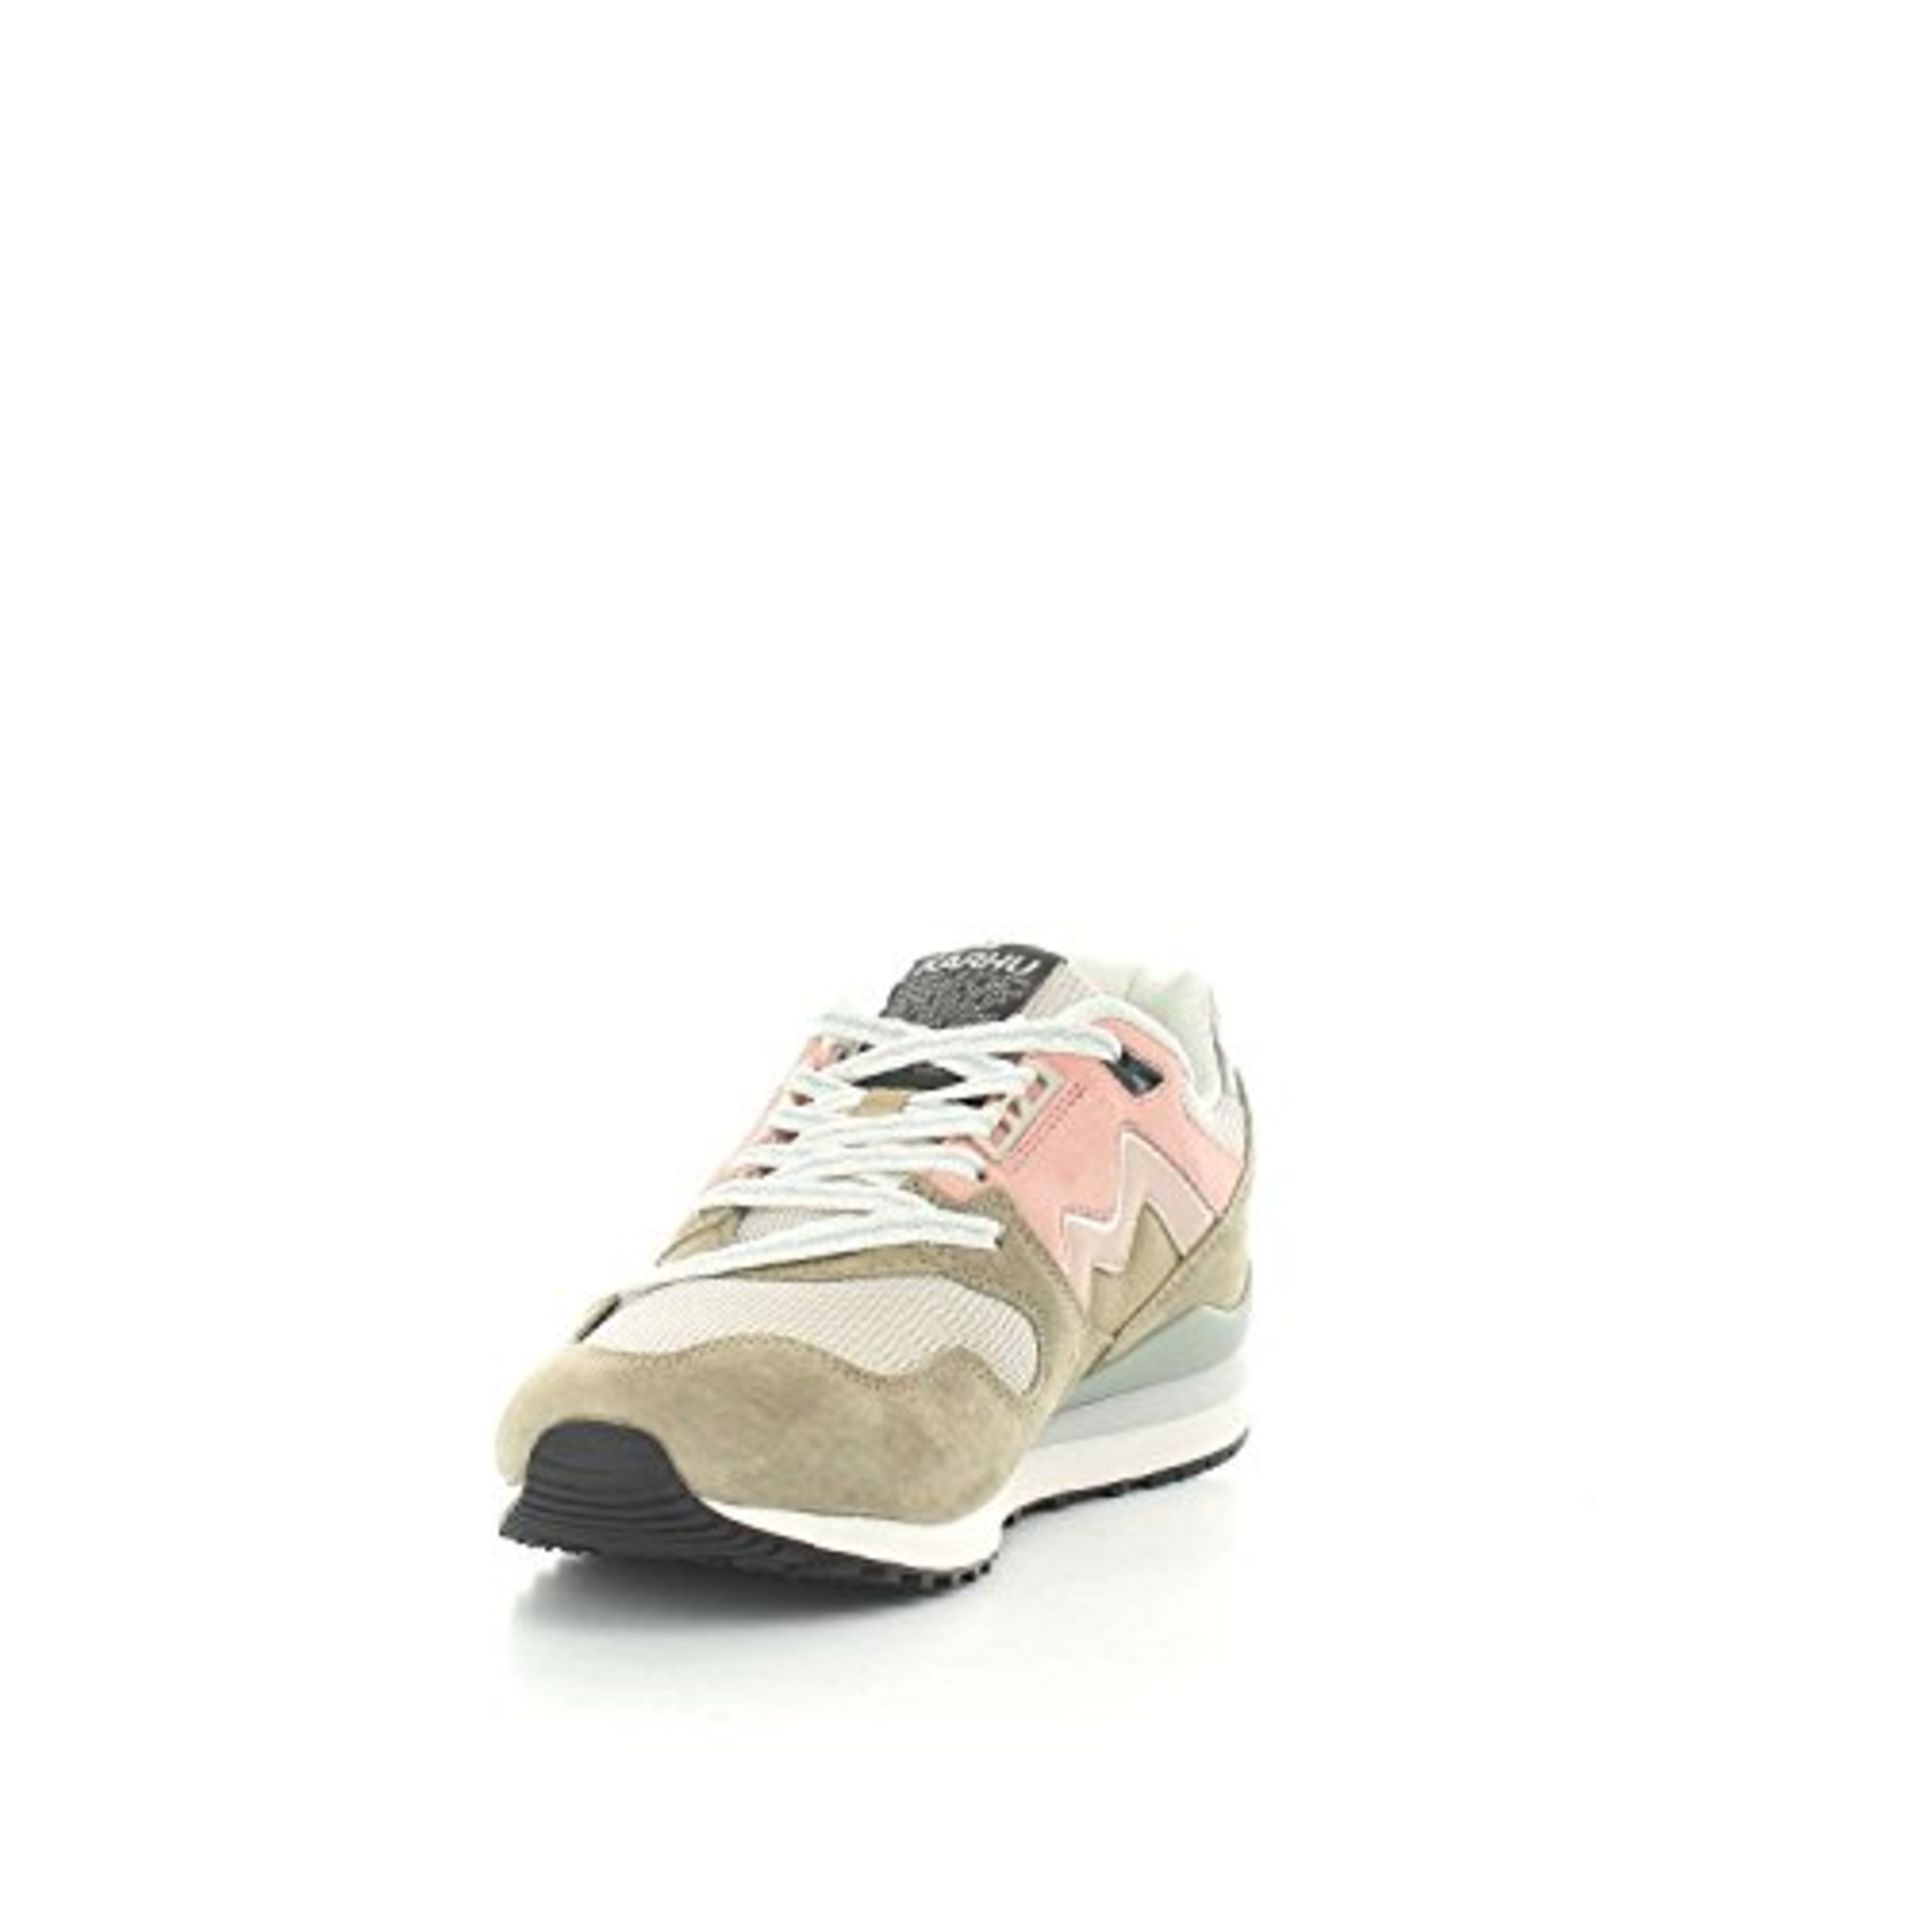 1 x Kahru F802629 Sneakers Man Marrone 45 Size: 10 UK | EAN: 0846171096141 - Image 4 of 5